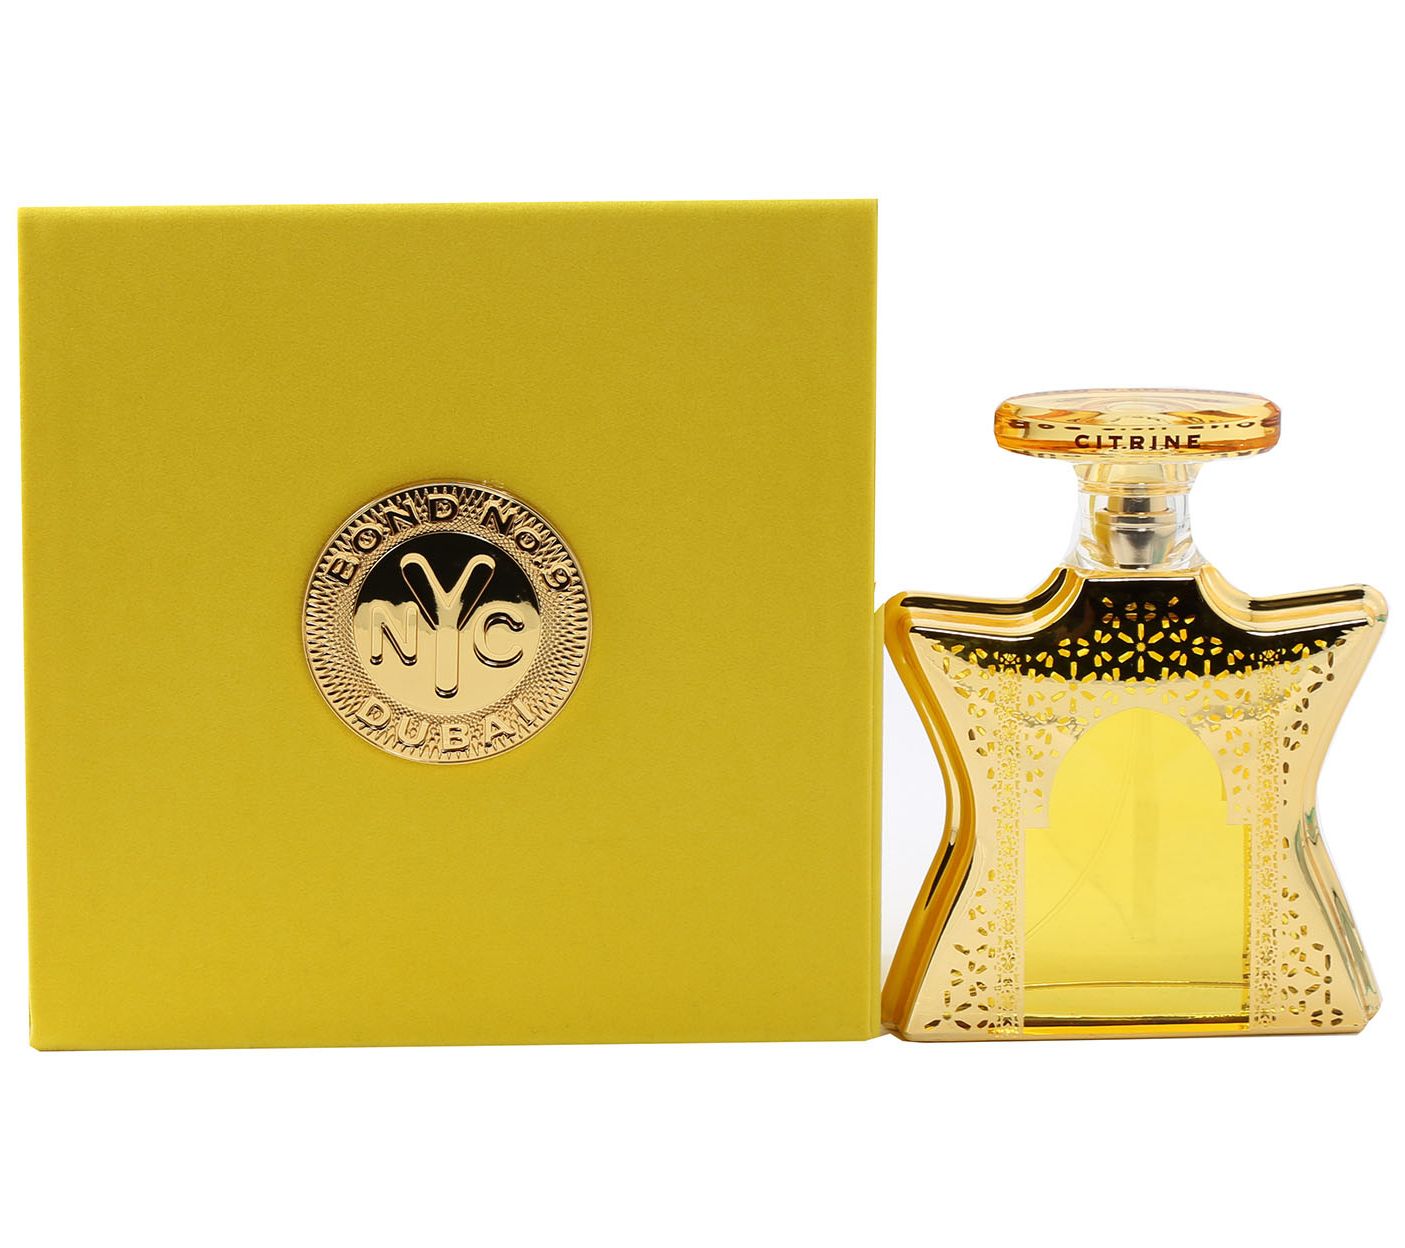 Oudia London  Luxury fragrances from Dubai